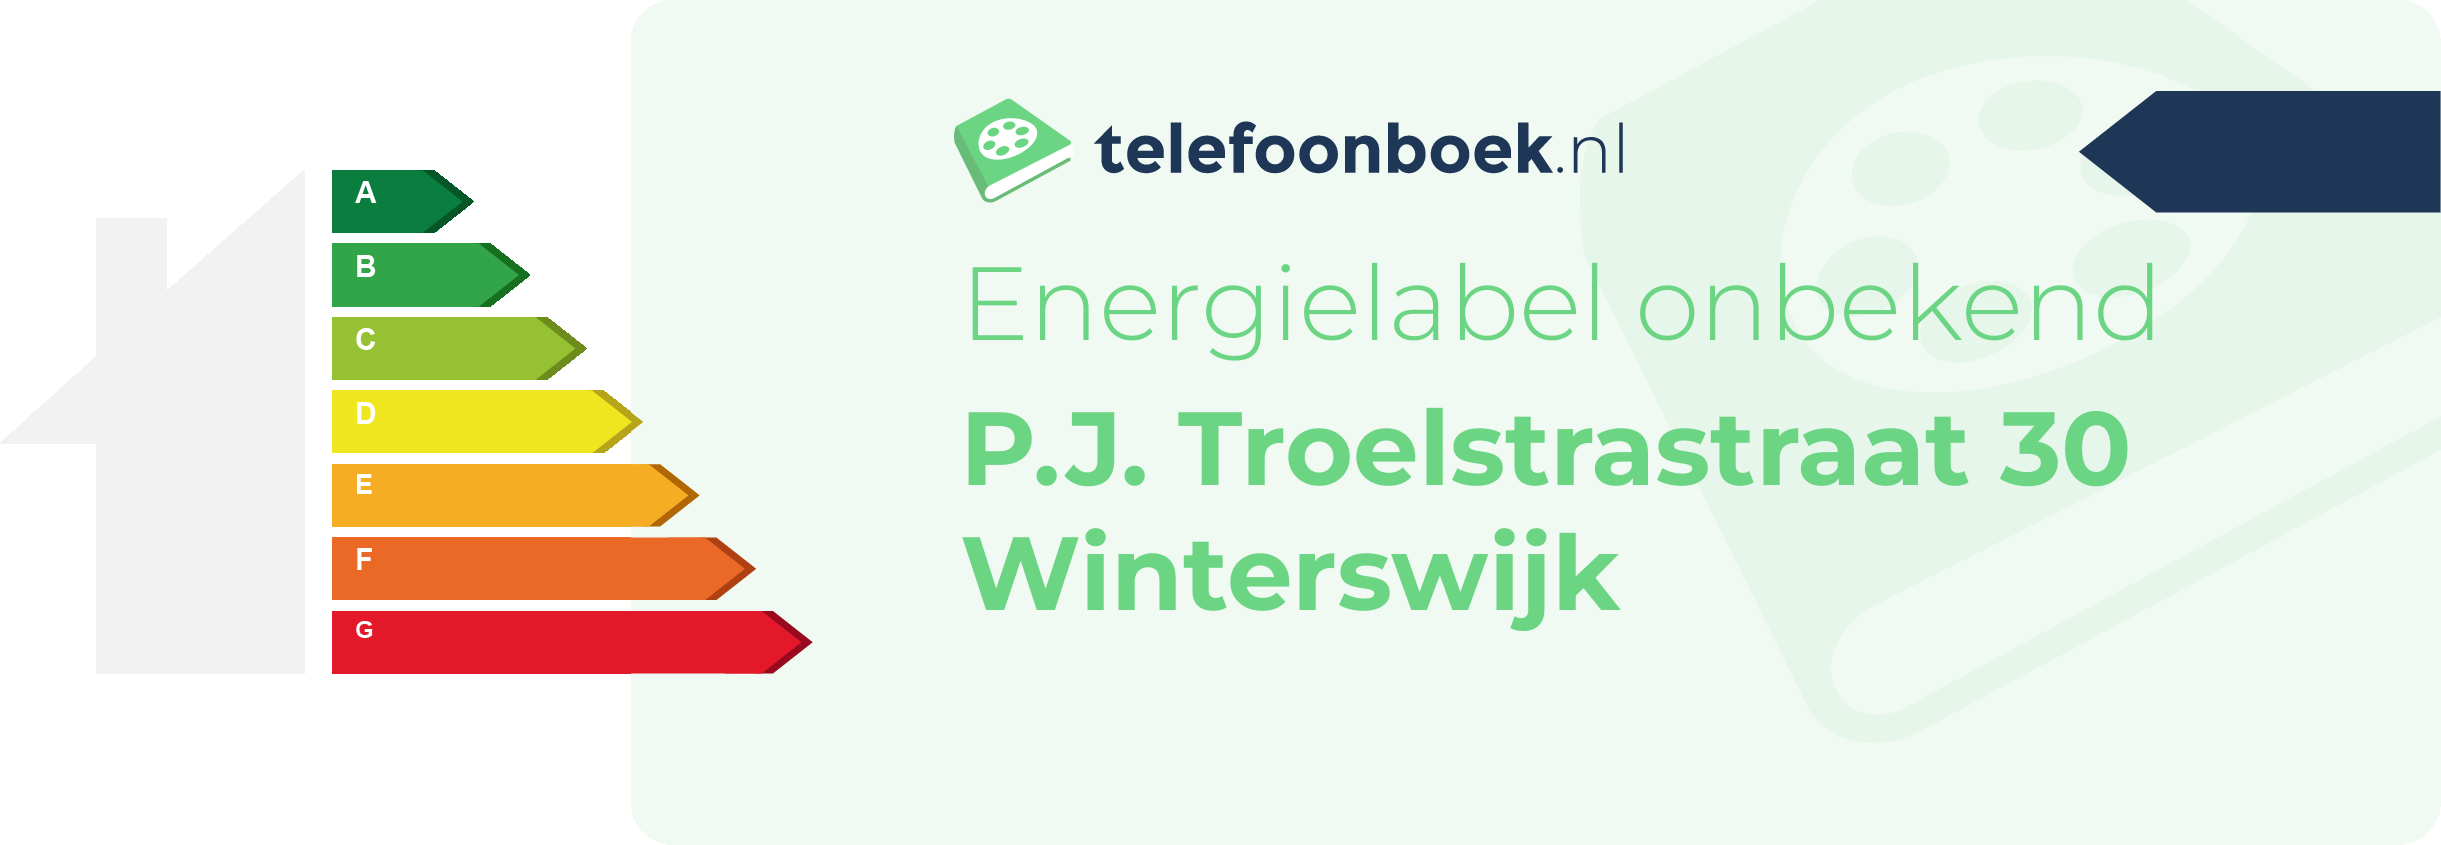 Energielabel P.J. Troelstrastraat 30 Winterswijk